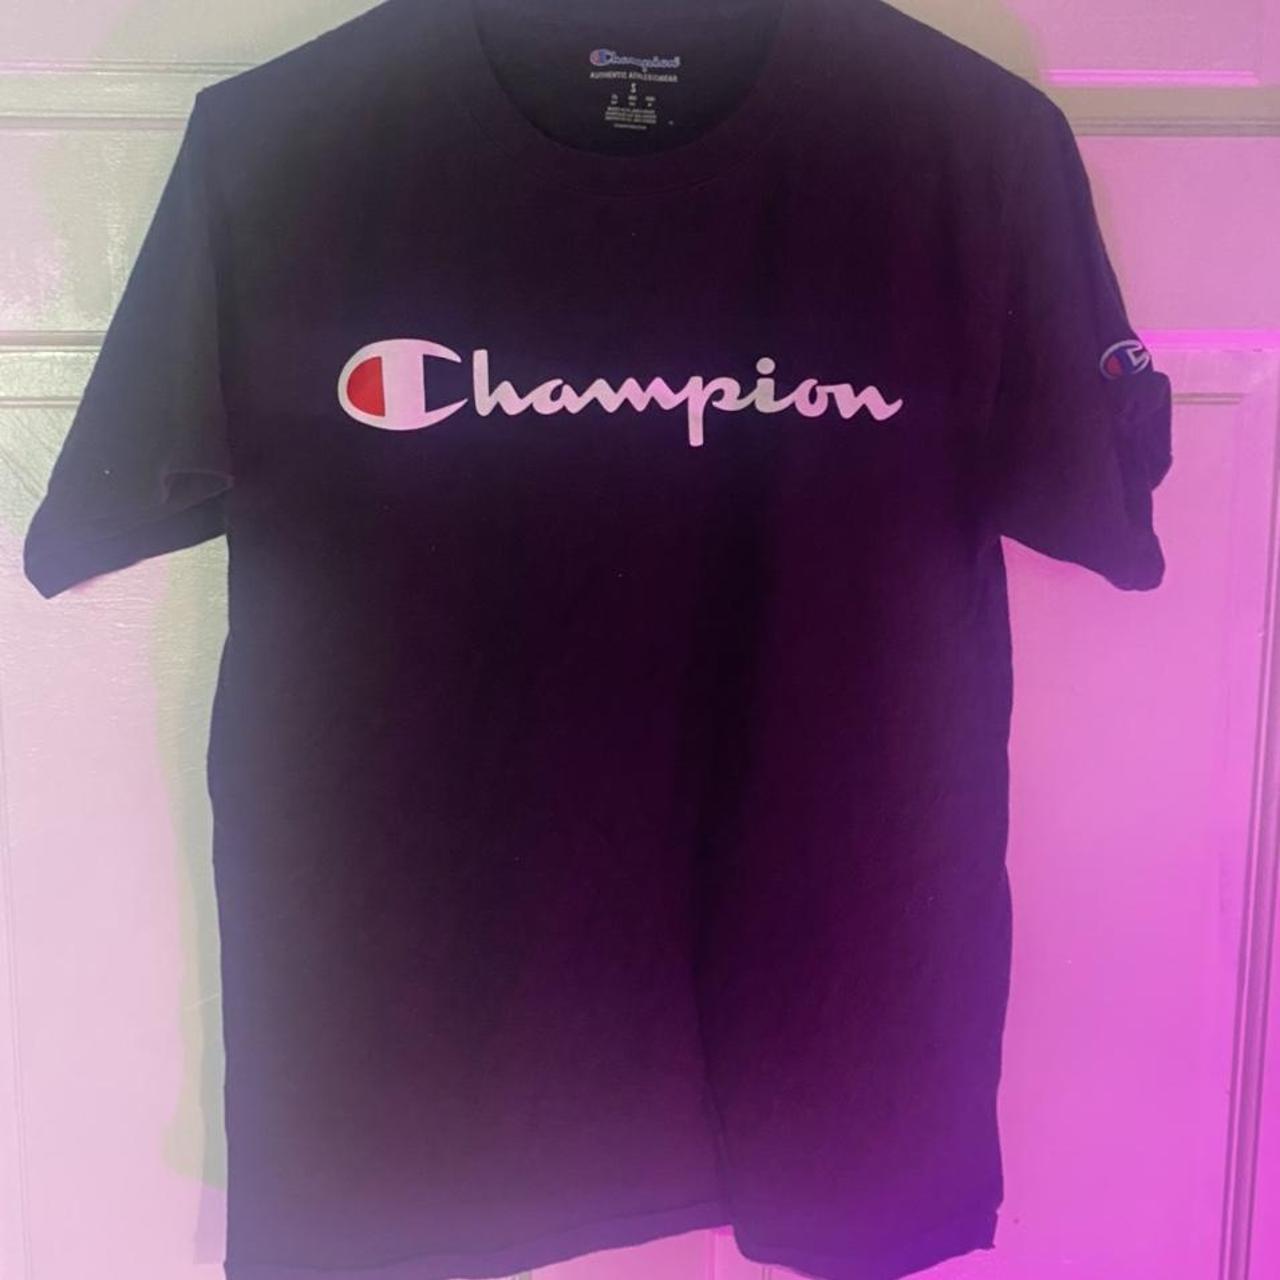 Champion Men's Black and White T-shirt | Depop